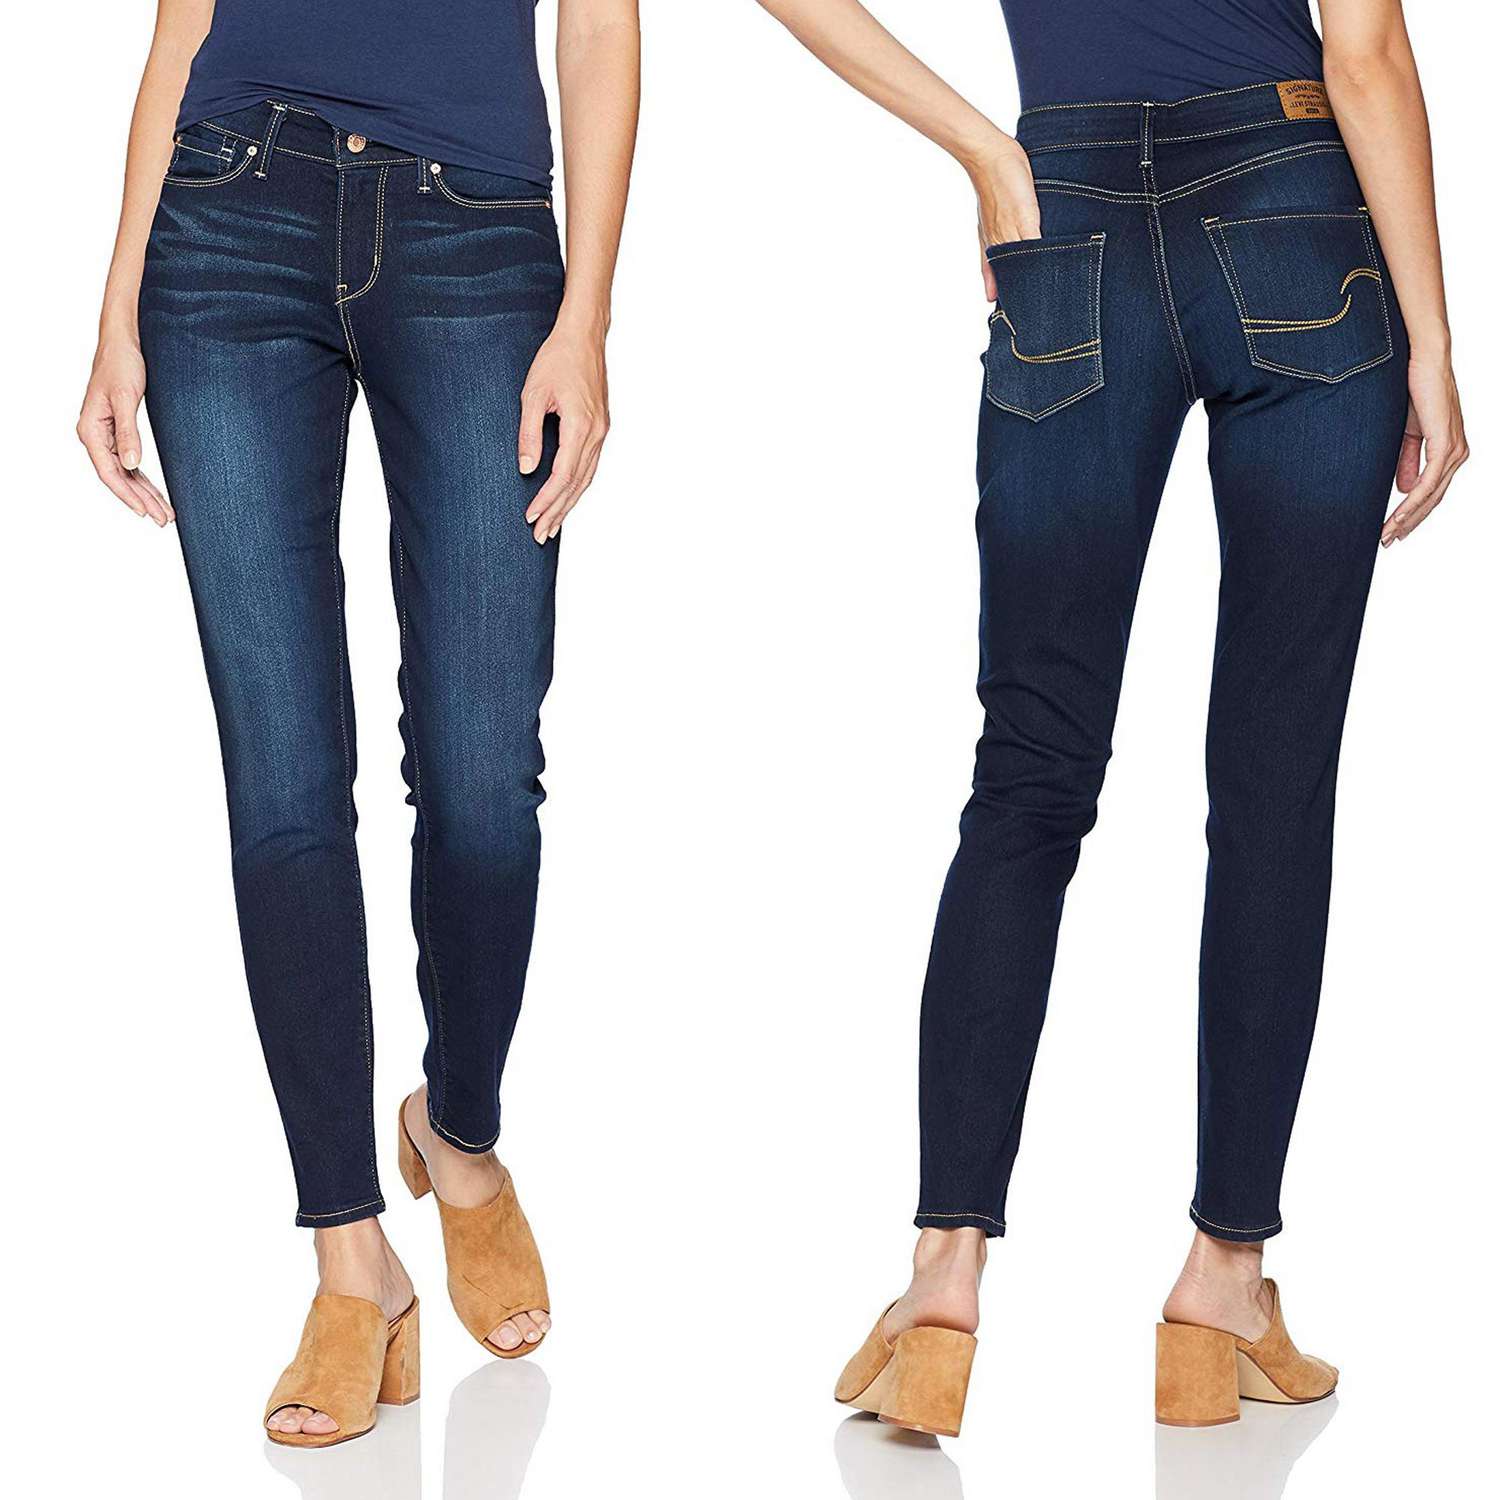 Shop Cyber Monday Levis Skinny Jeans Sale on Amazon | PEOPLE.com